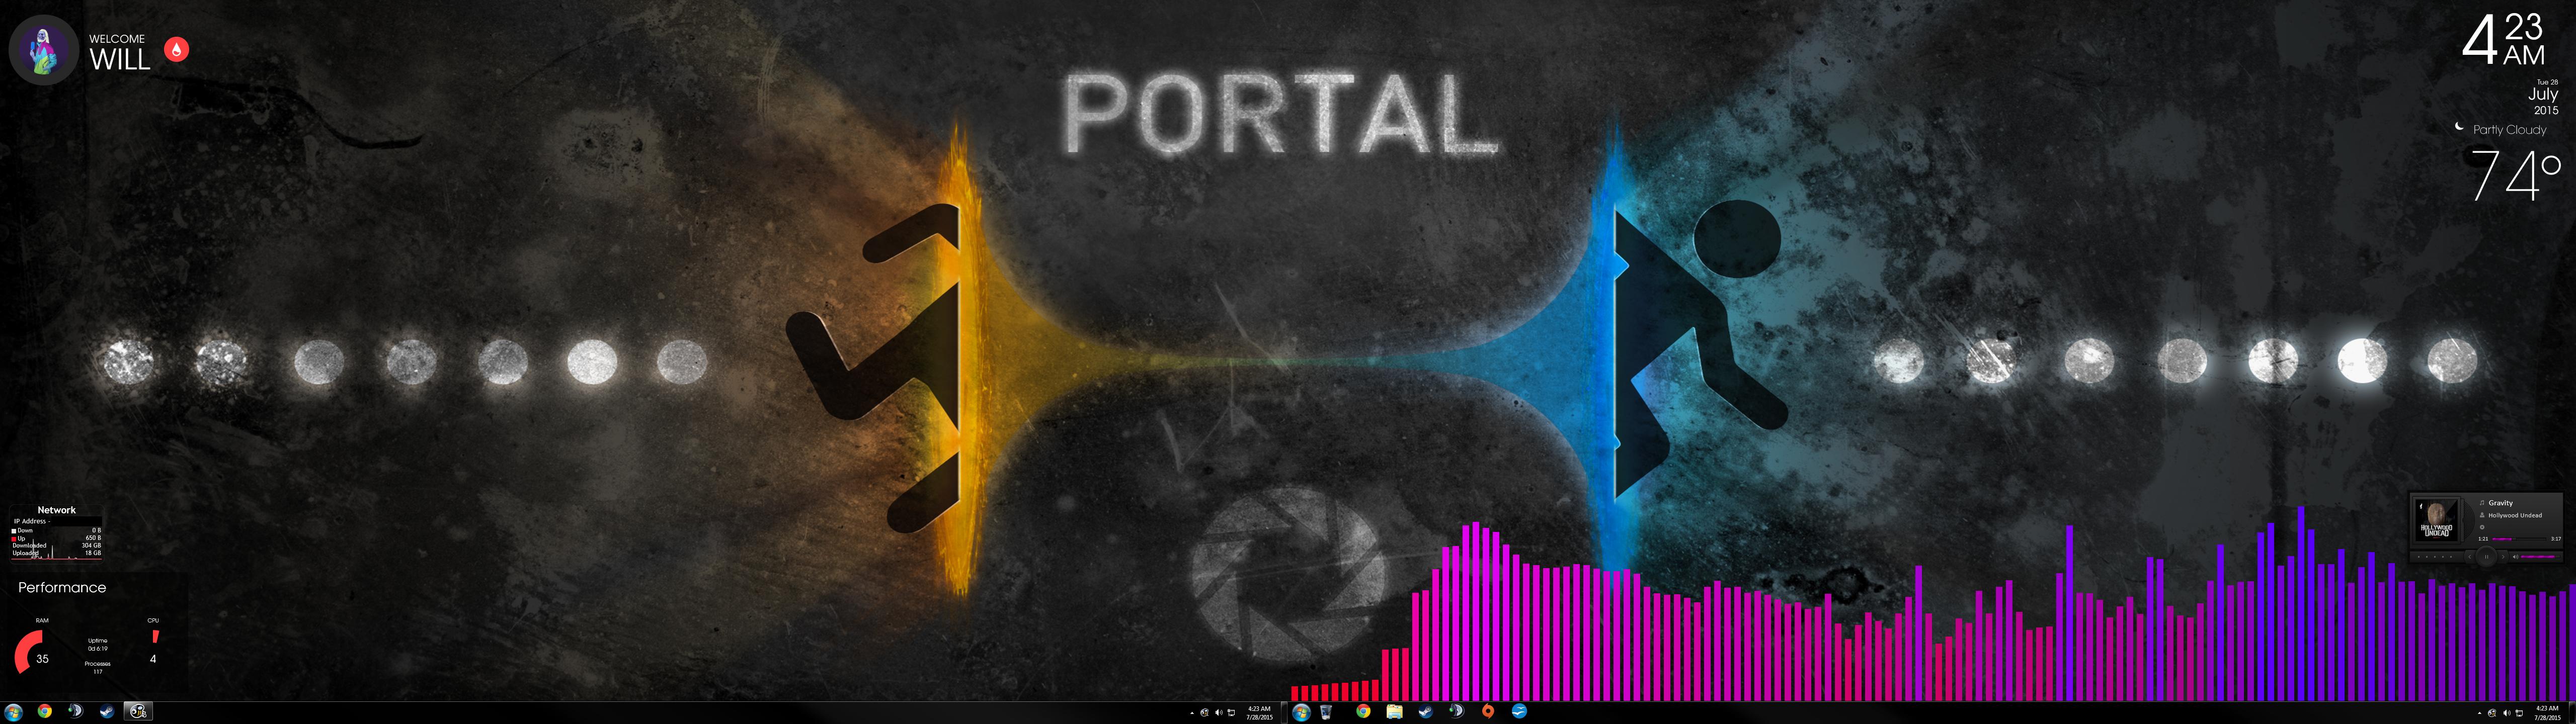 Dual Monitor Portal - HD Wallpaper 